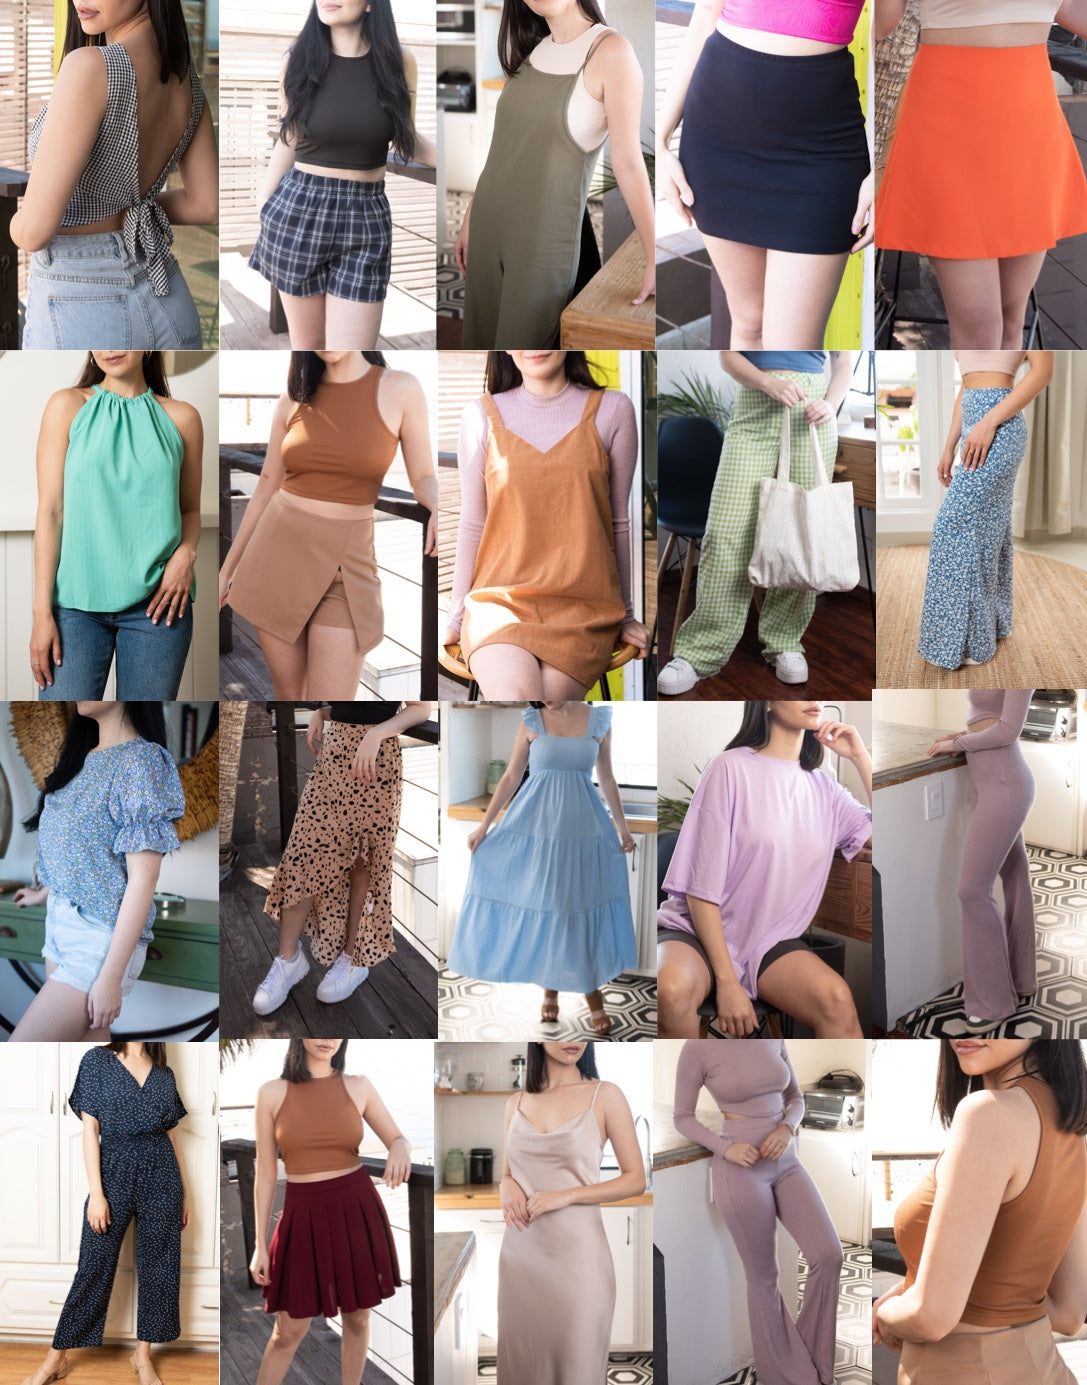 Womens Loungewear Sewing Pattern PDF Digital Pattern Sweater